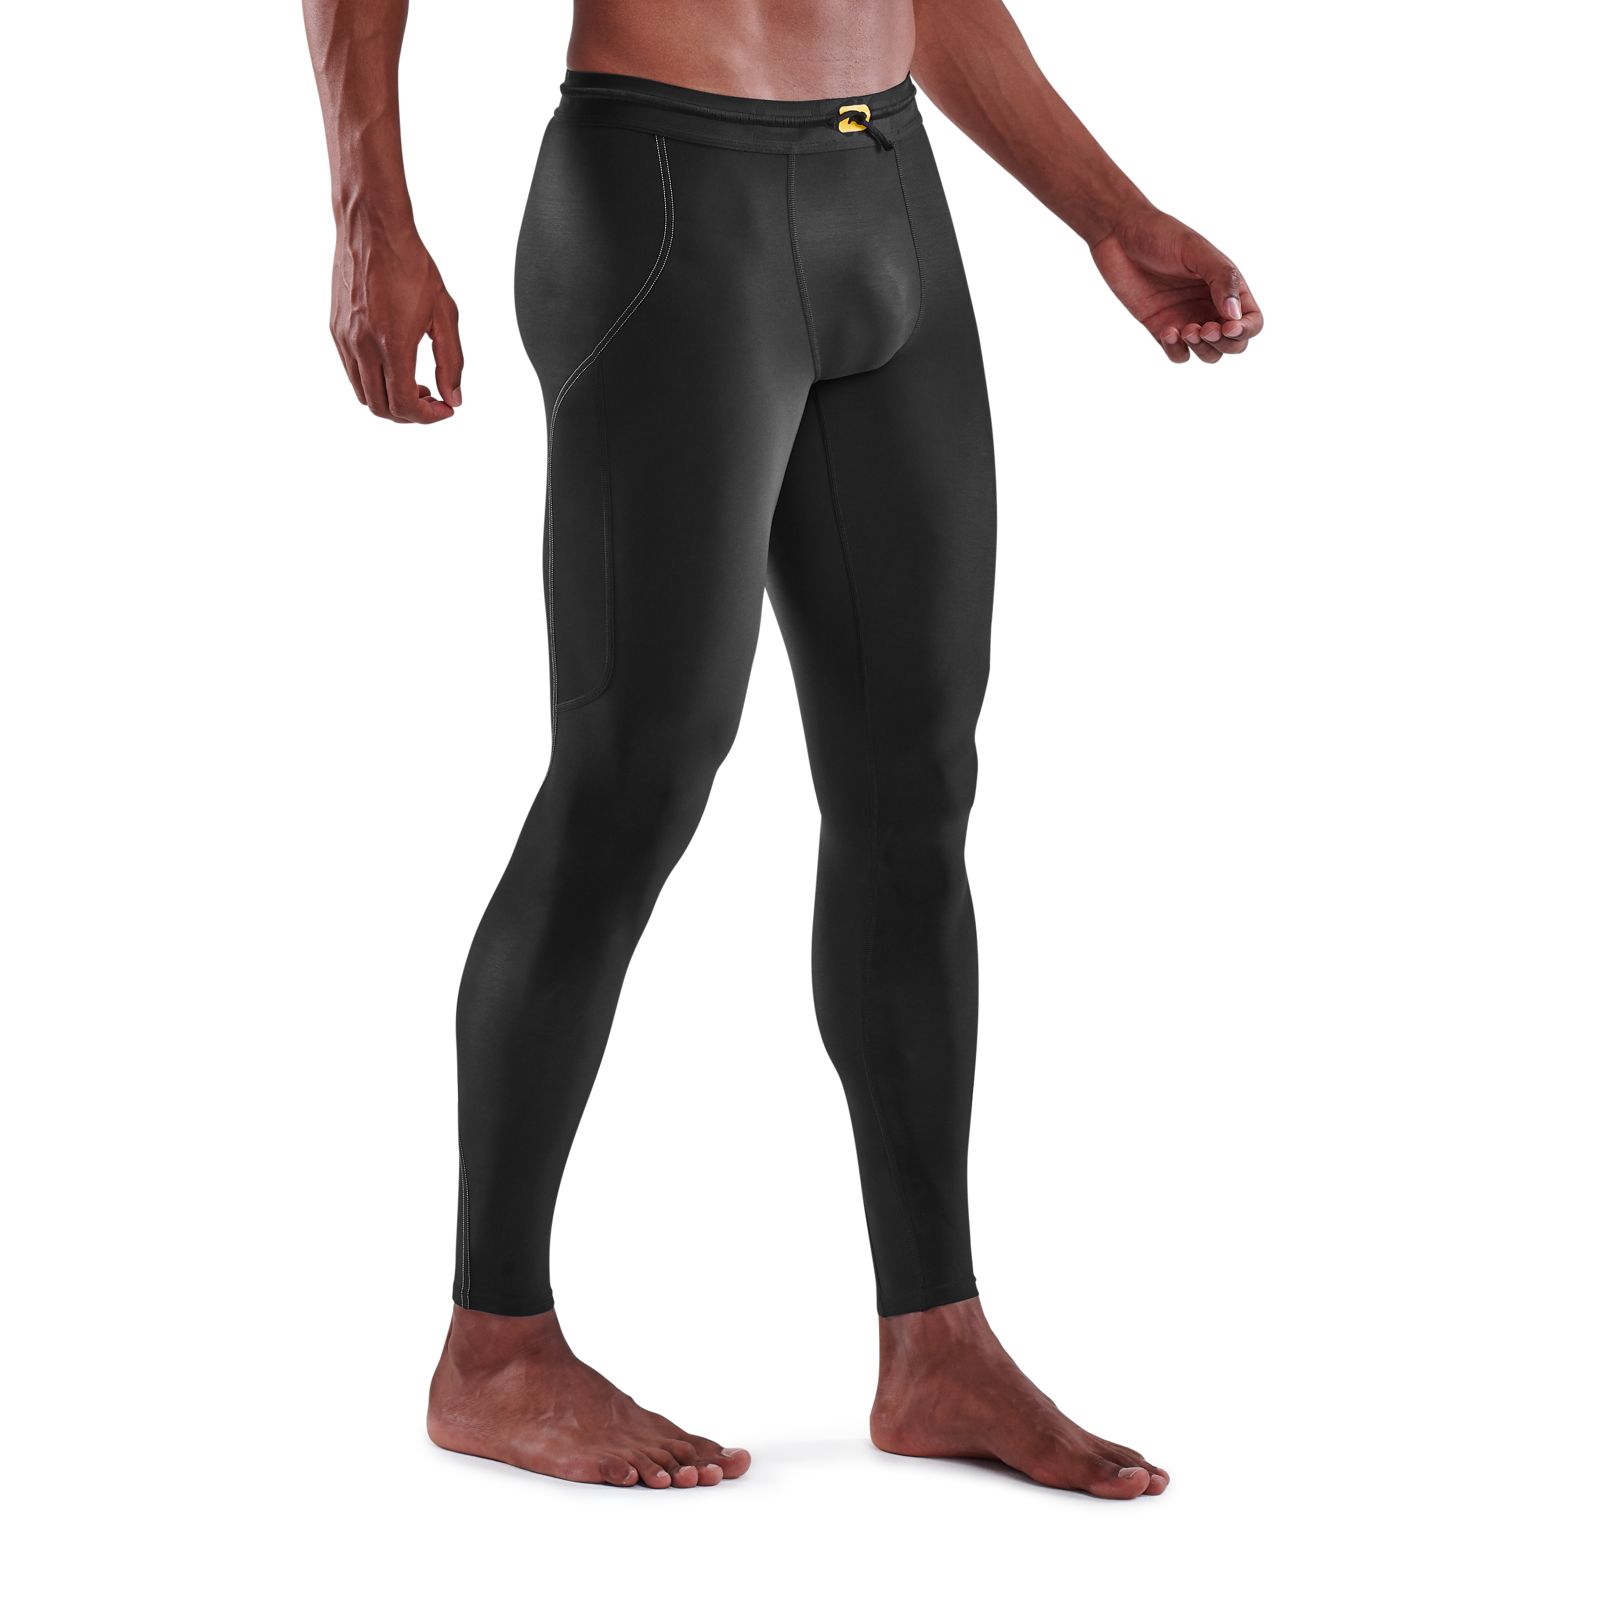 SKINS Men's K-Proprium Long Tights - Black/Carbon, X-Large : :  Fashion